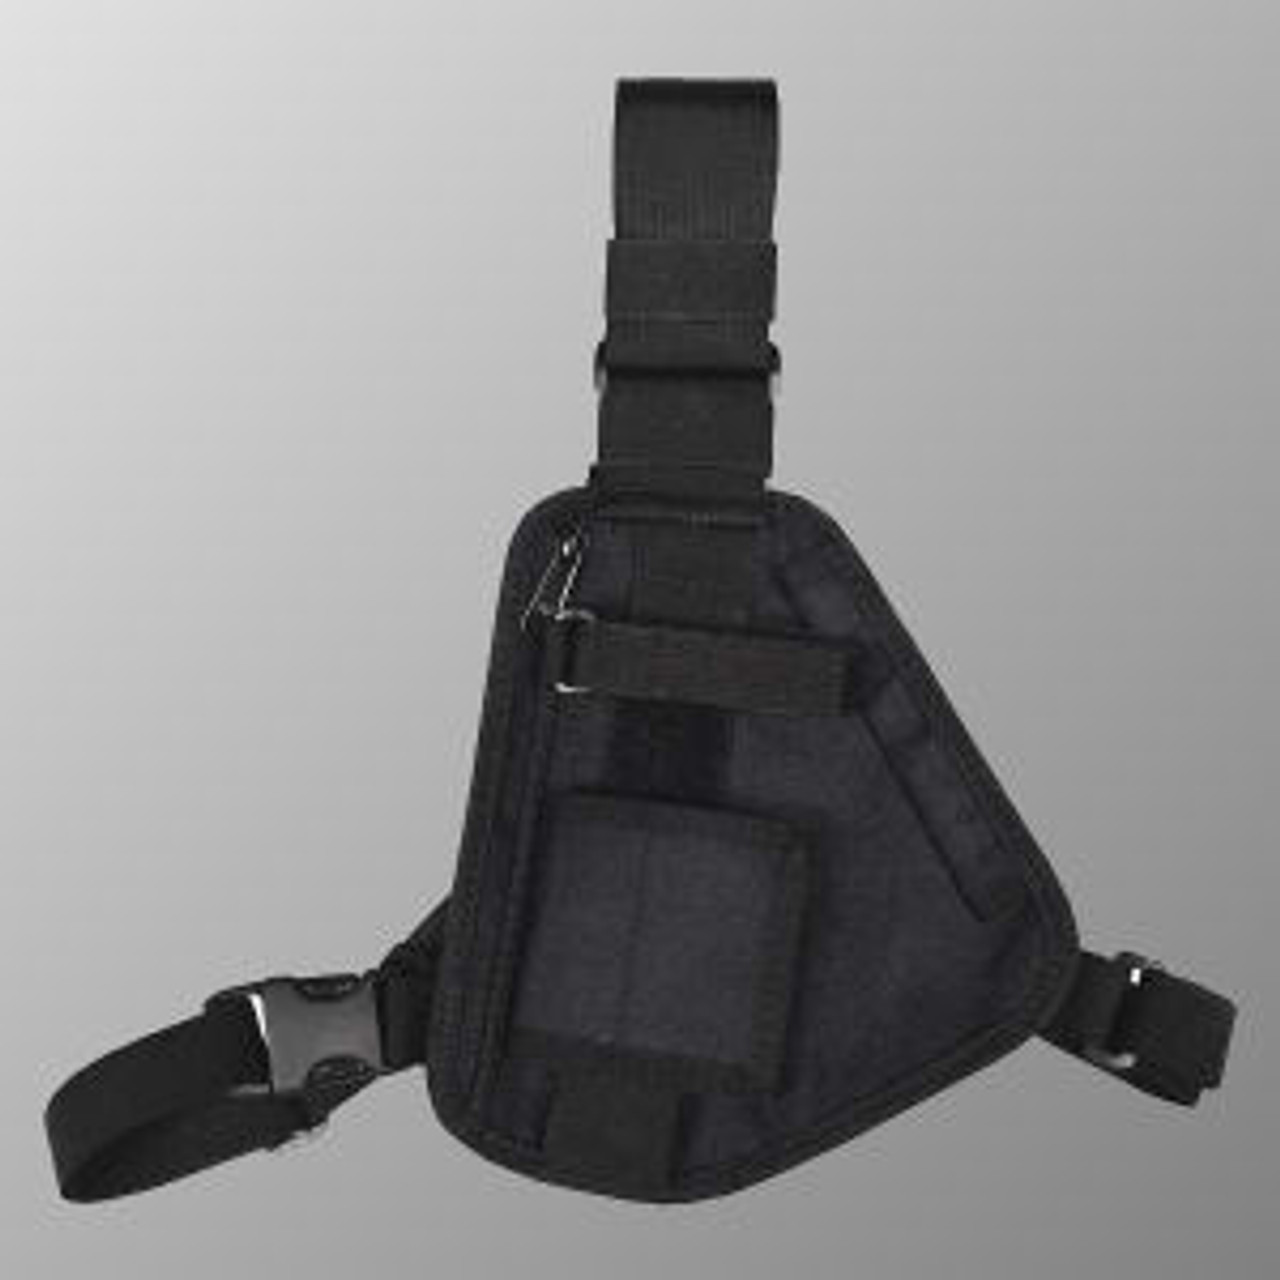 ICOM IC-F4GS 3-Point Chest Harness - Black